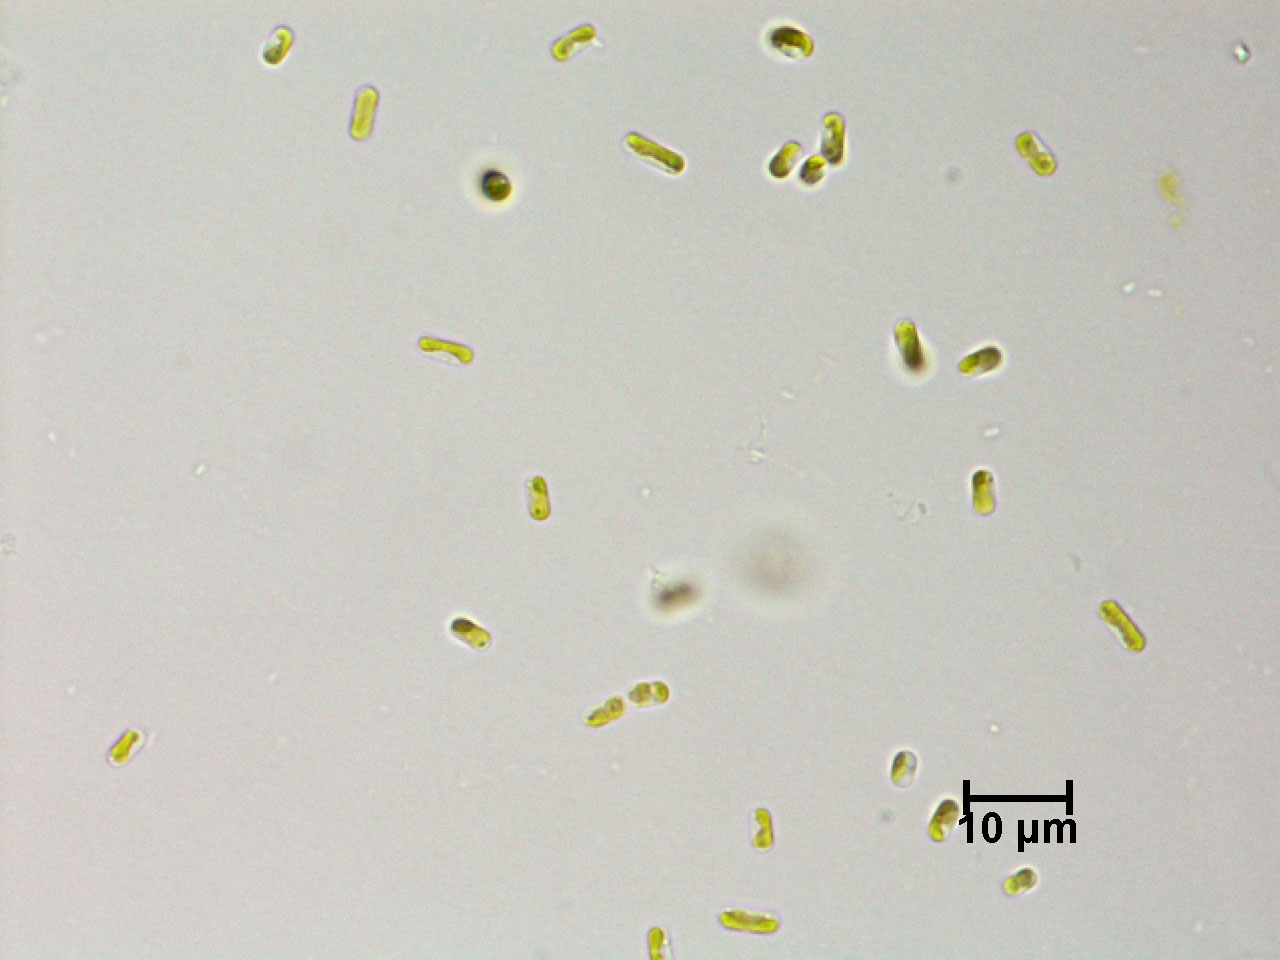 Stichococcus bacillaris (Code - 7A1SS)